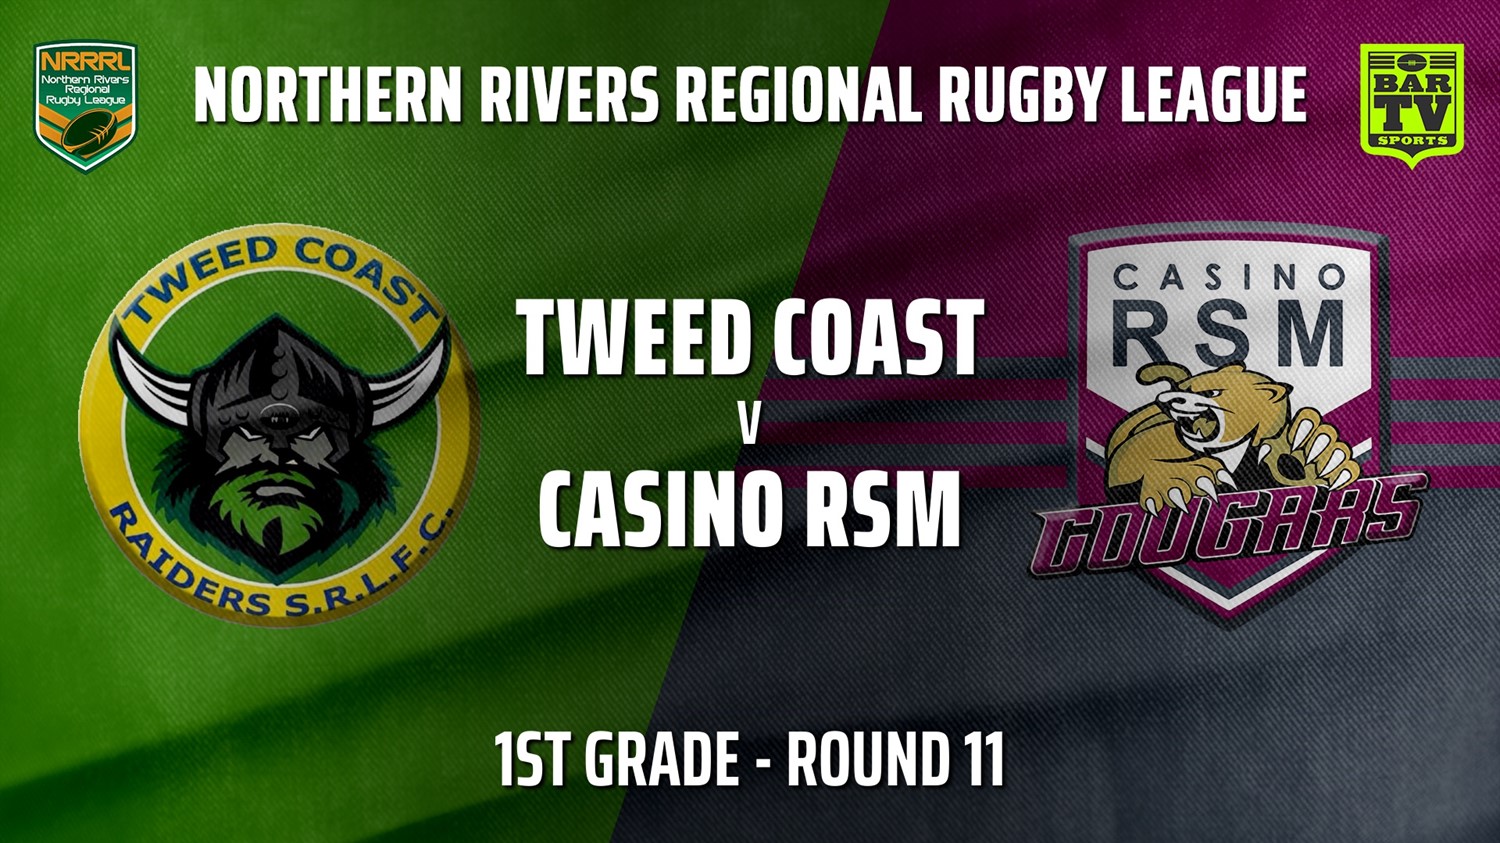 210718-Northern Rivers Round 11 - 1st Grade - Tweed Coast Raiders v Casino RSM Cougars Slate Image